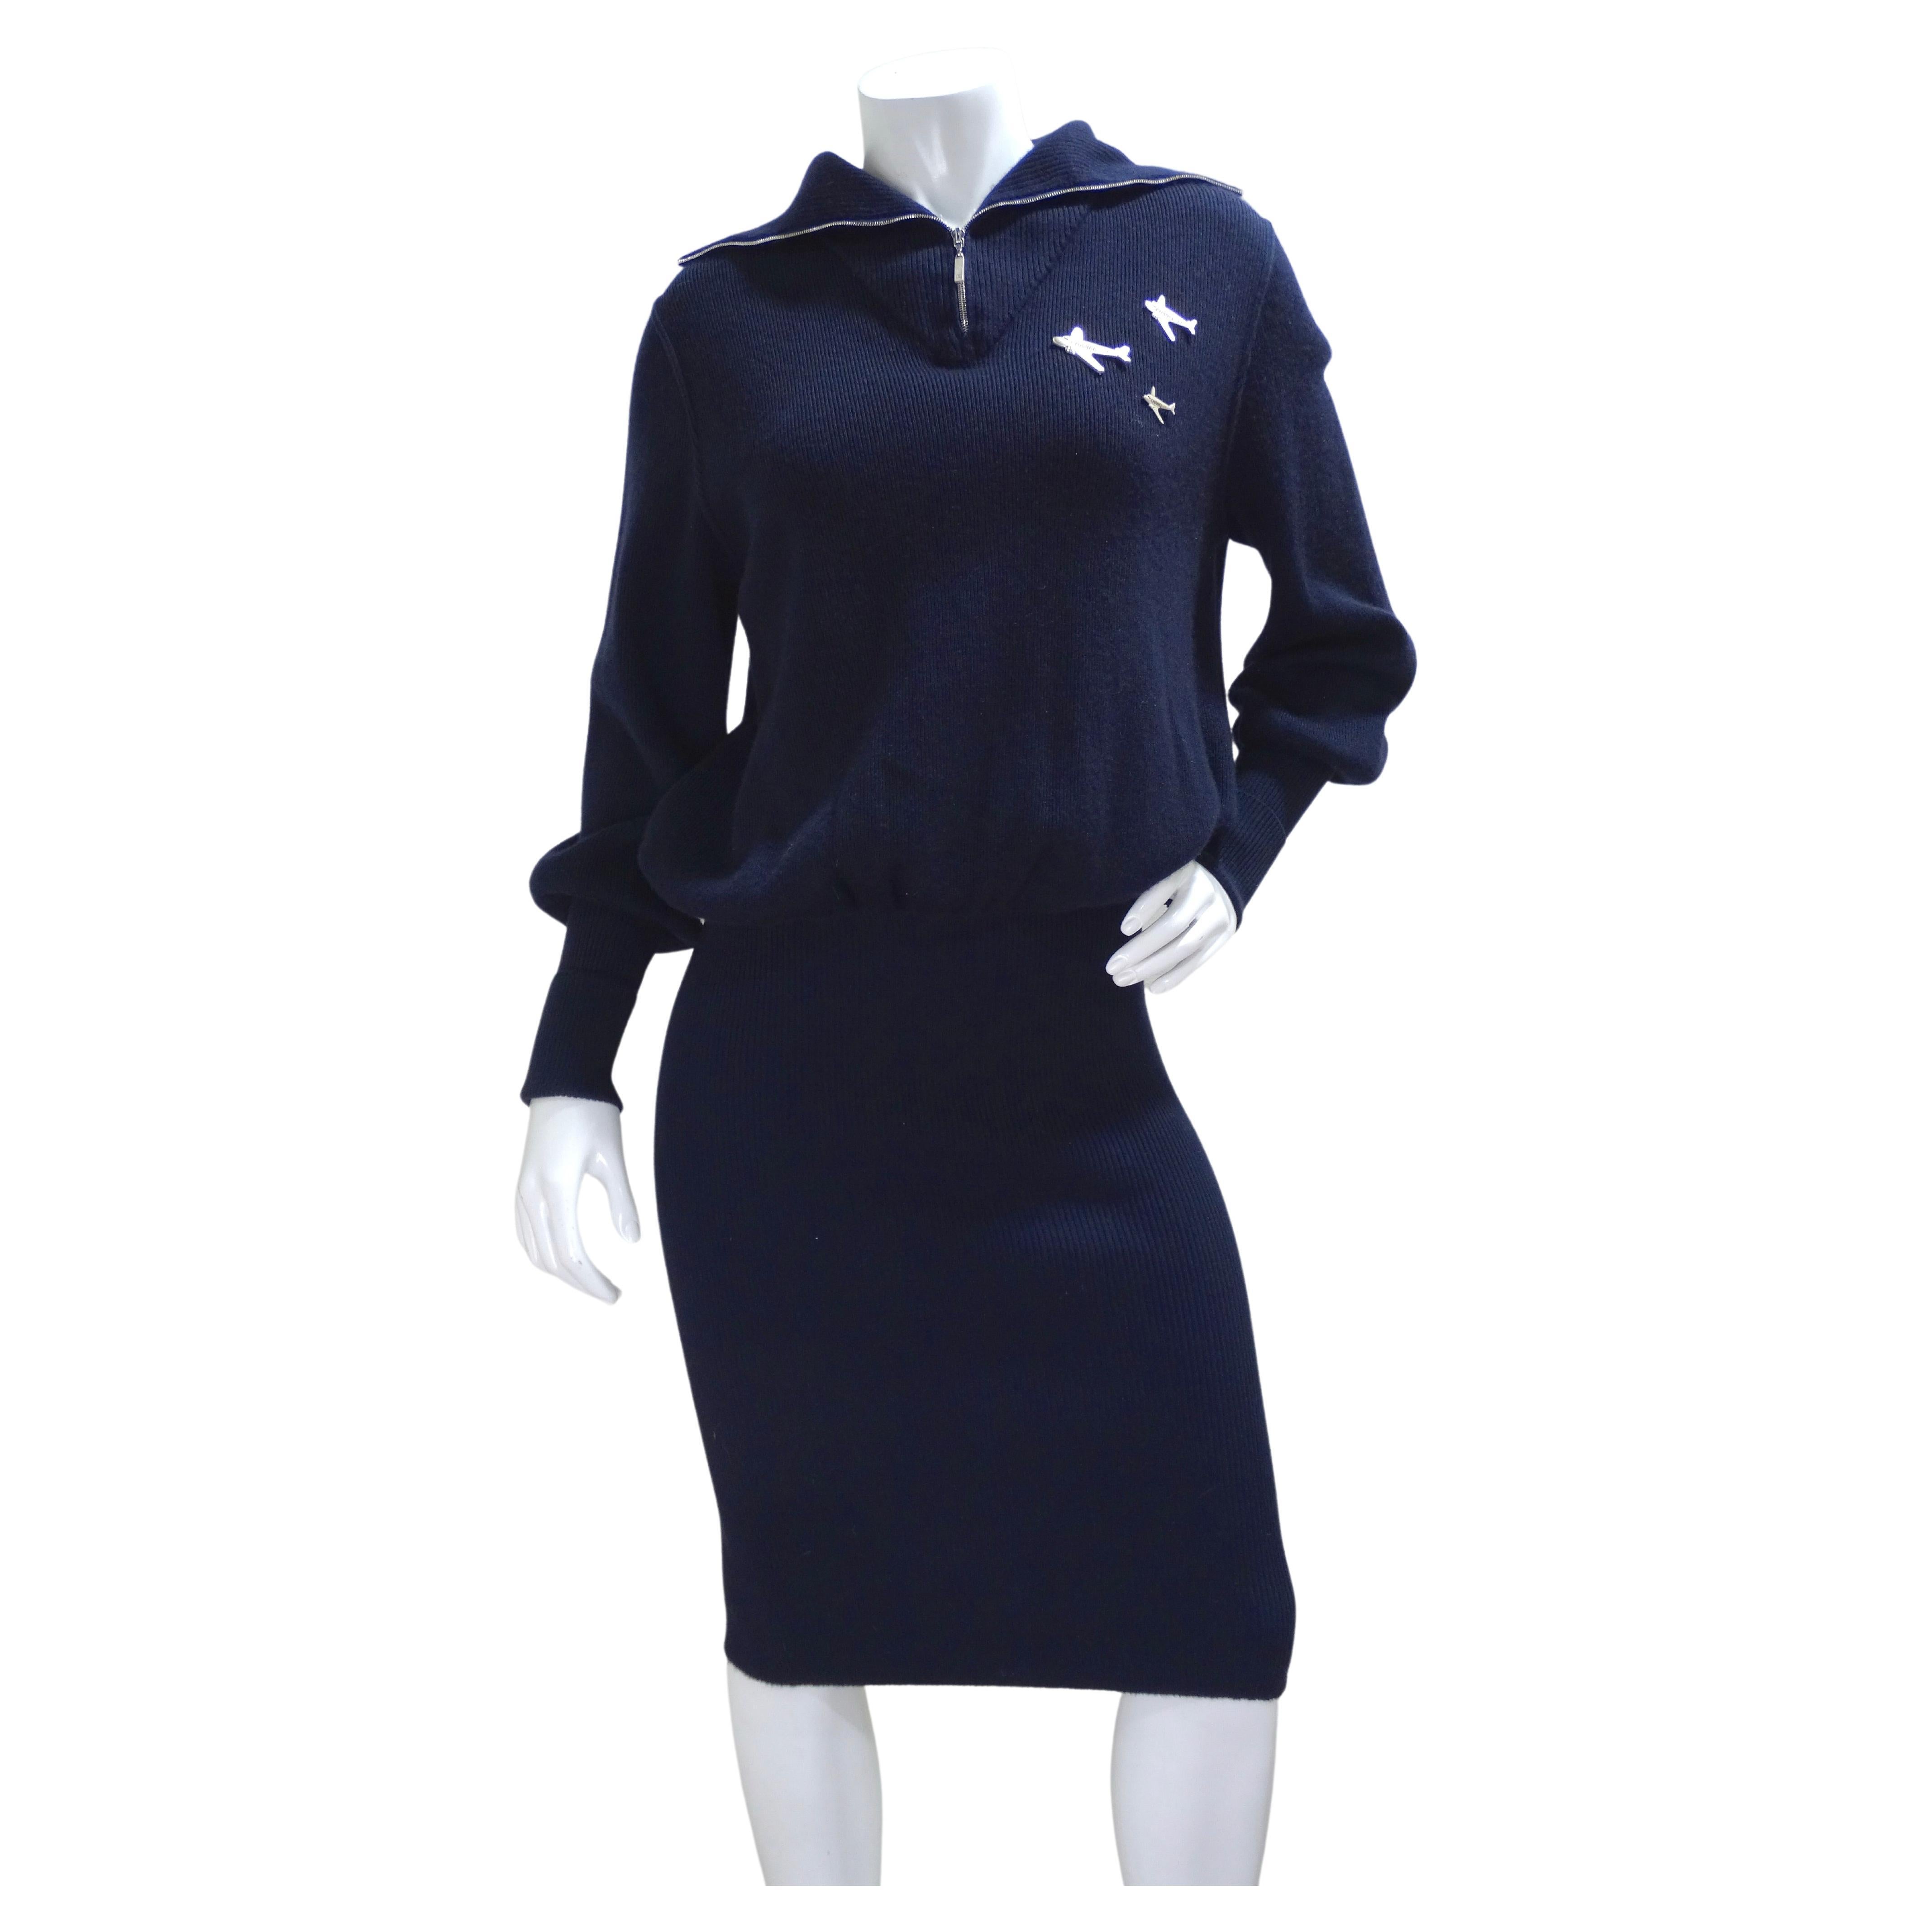 Chanel Cashmere Knit Plane Pins Navy Blue Dress